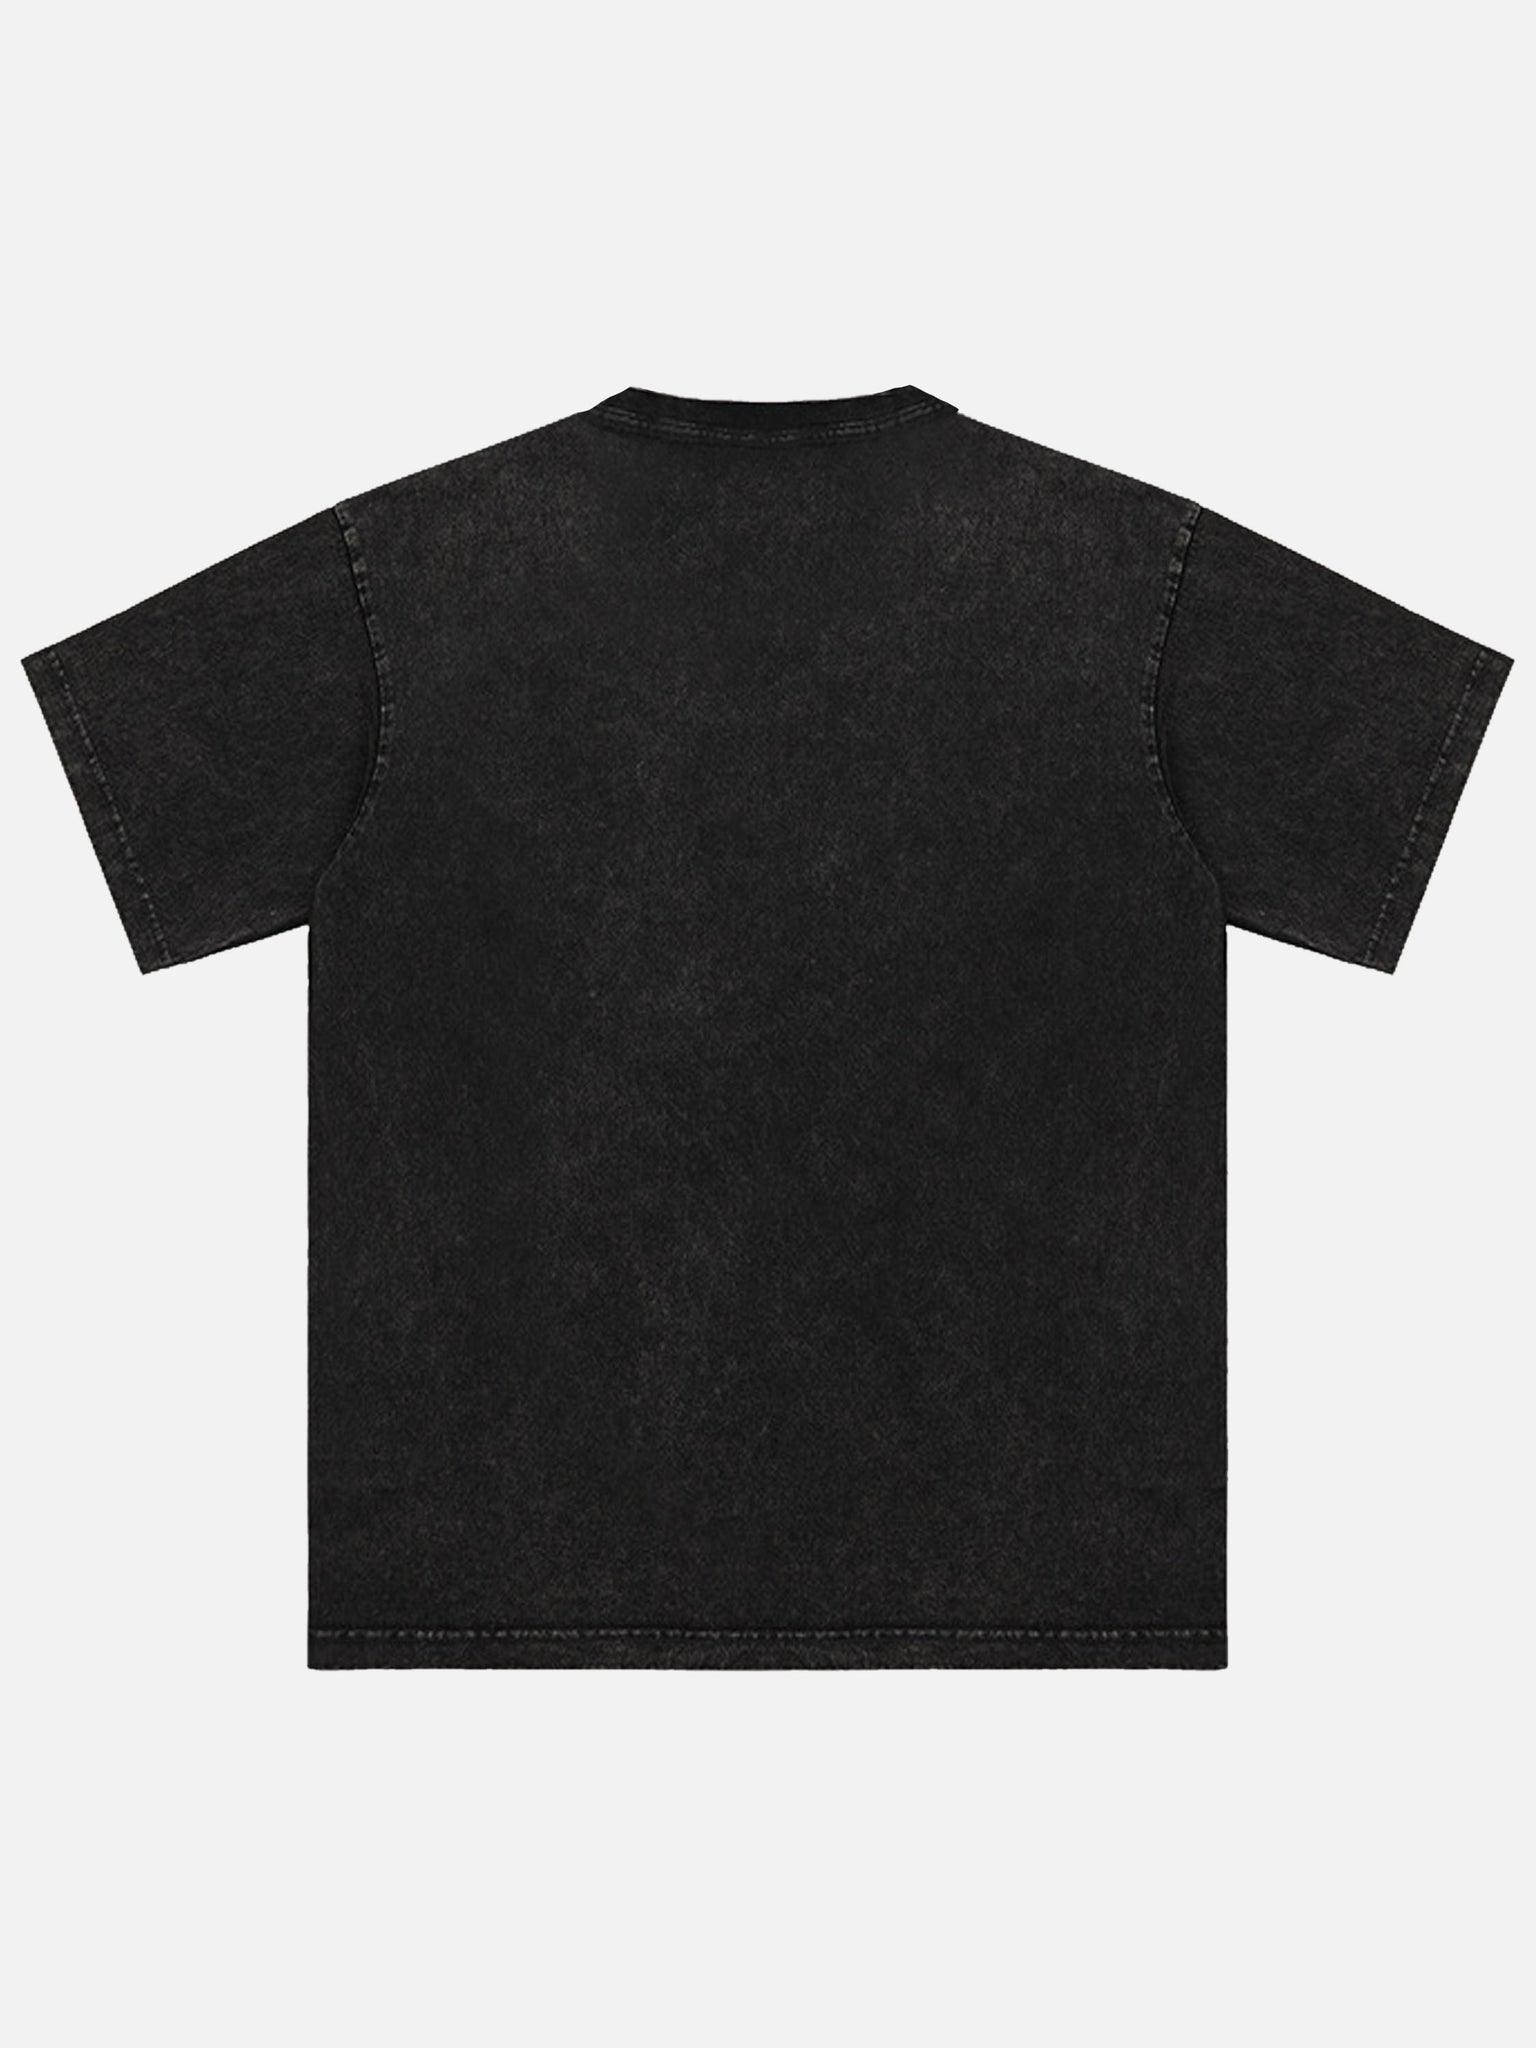 The Supermade Vintage Washed Dark Print T-shirt